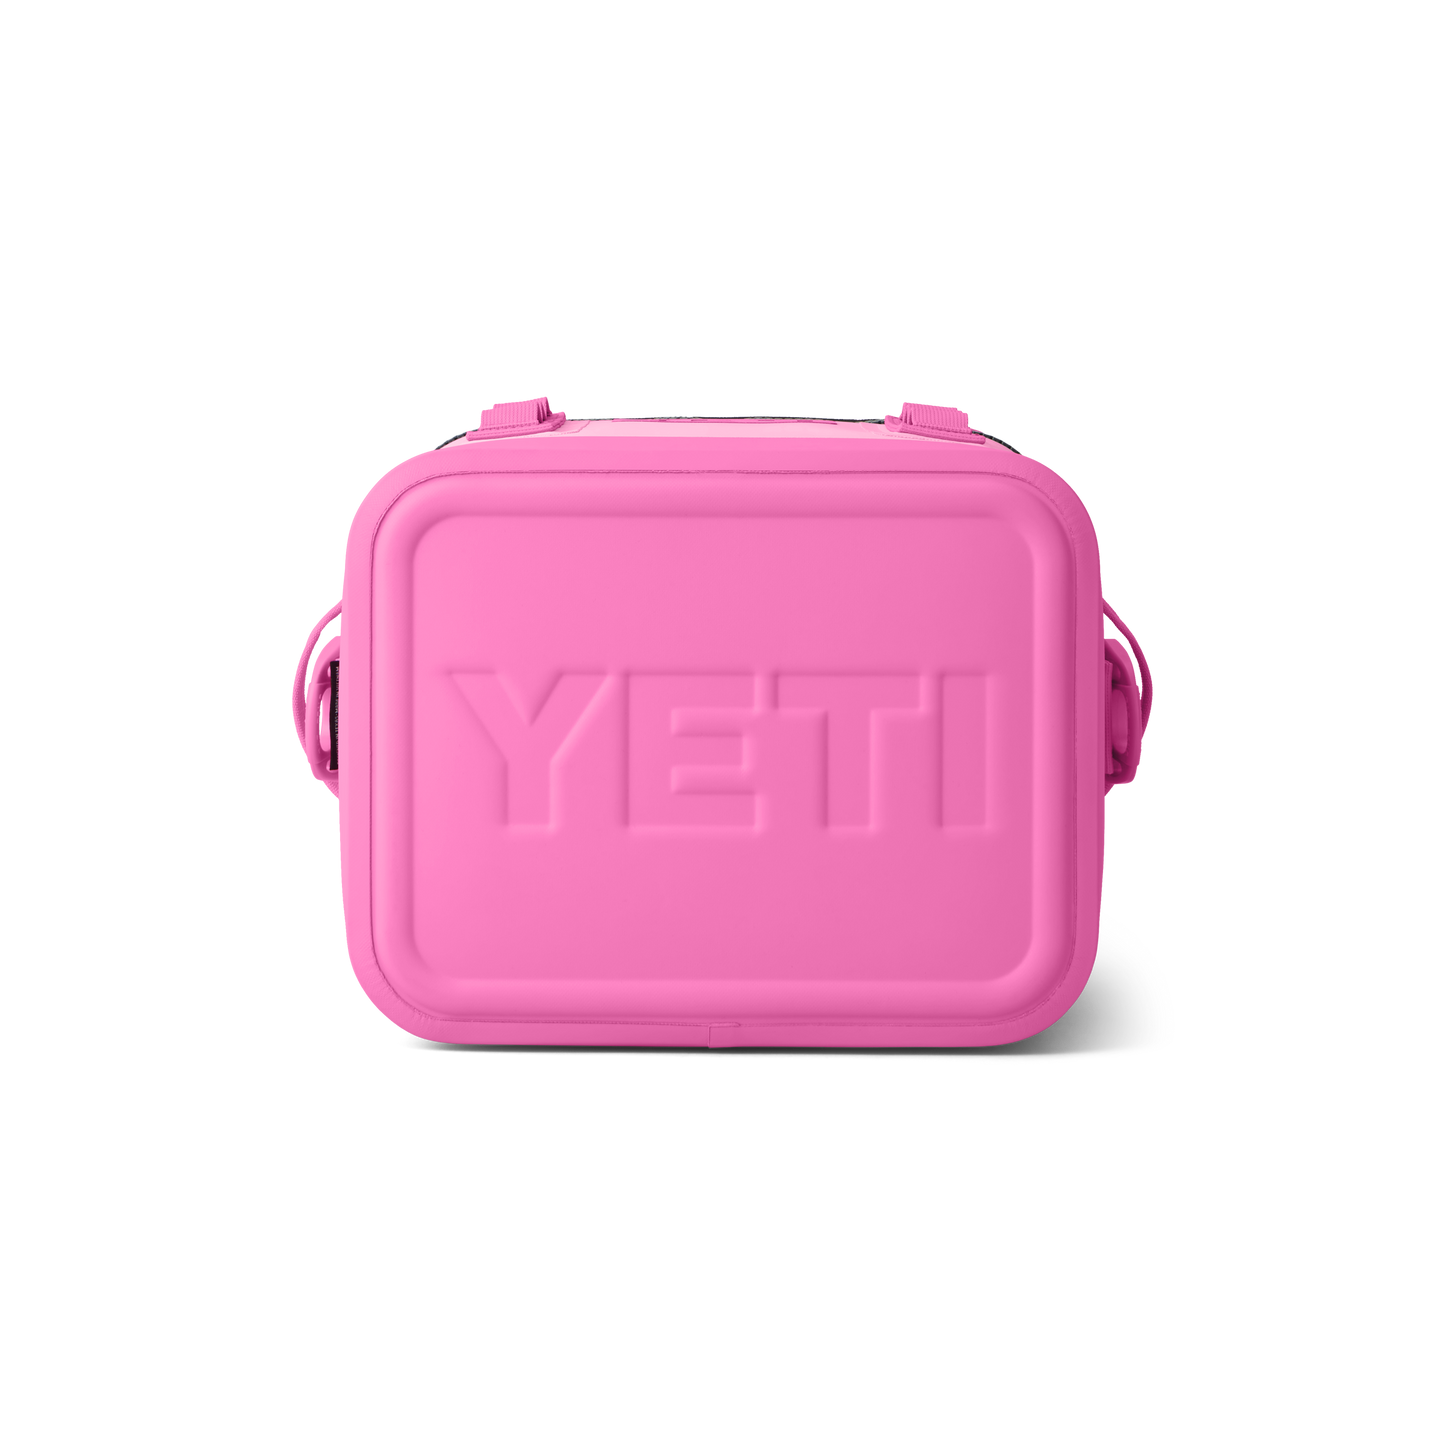 YETI Hopper Flip® 12 Kühltasche Power Pink